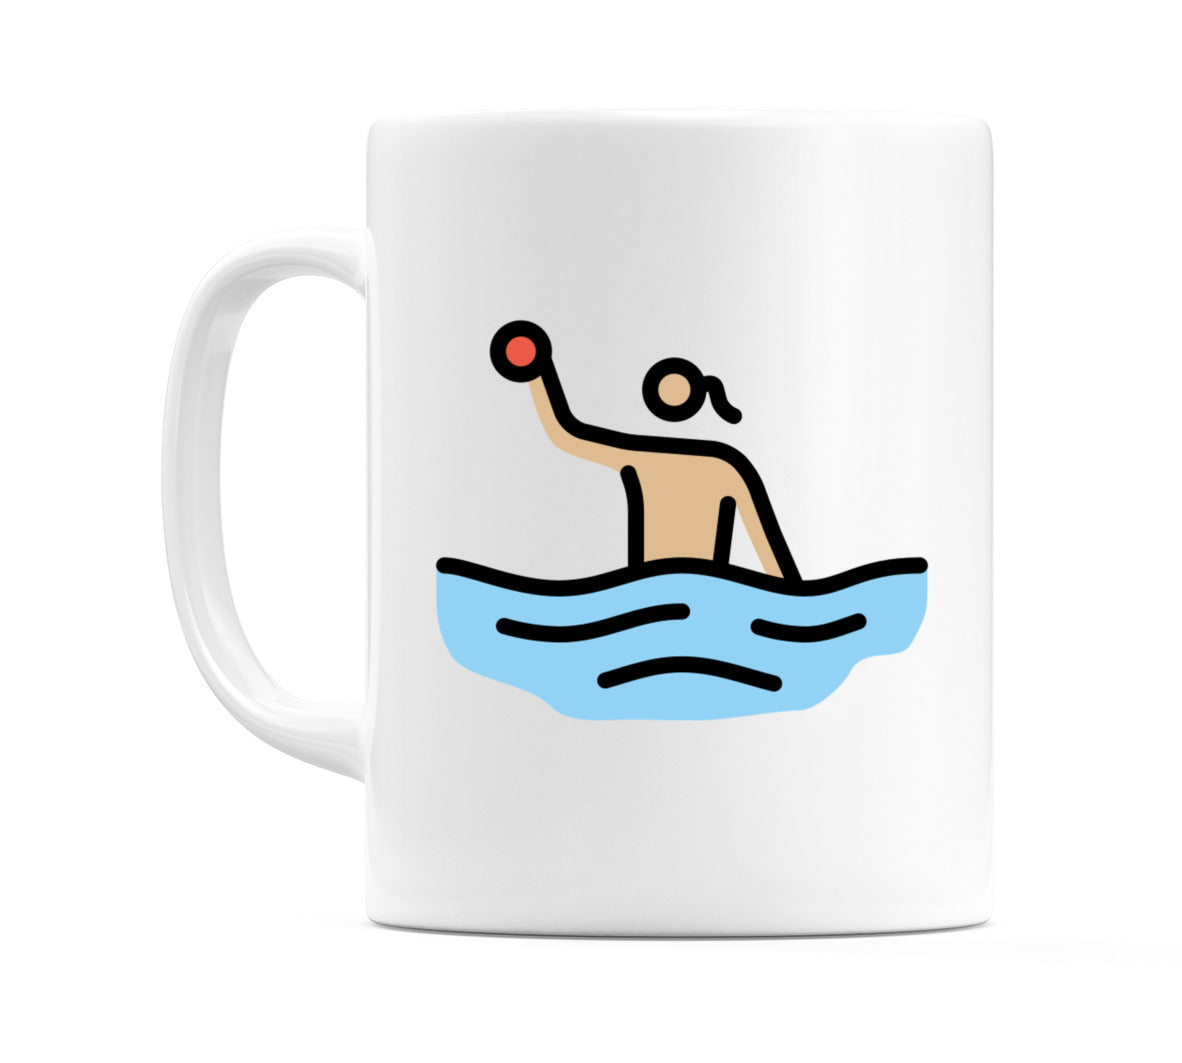 Female Playing Water Polo: Medium-Light Skin Tone Emoji Mug